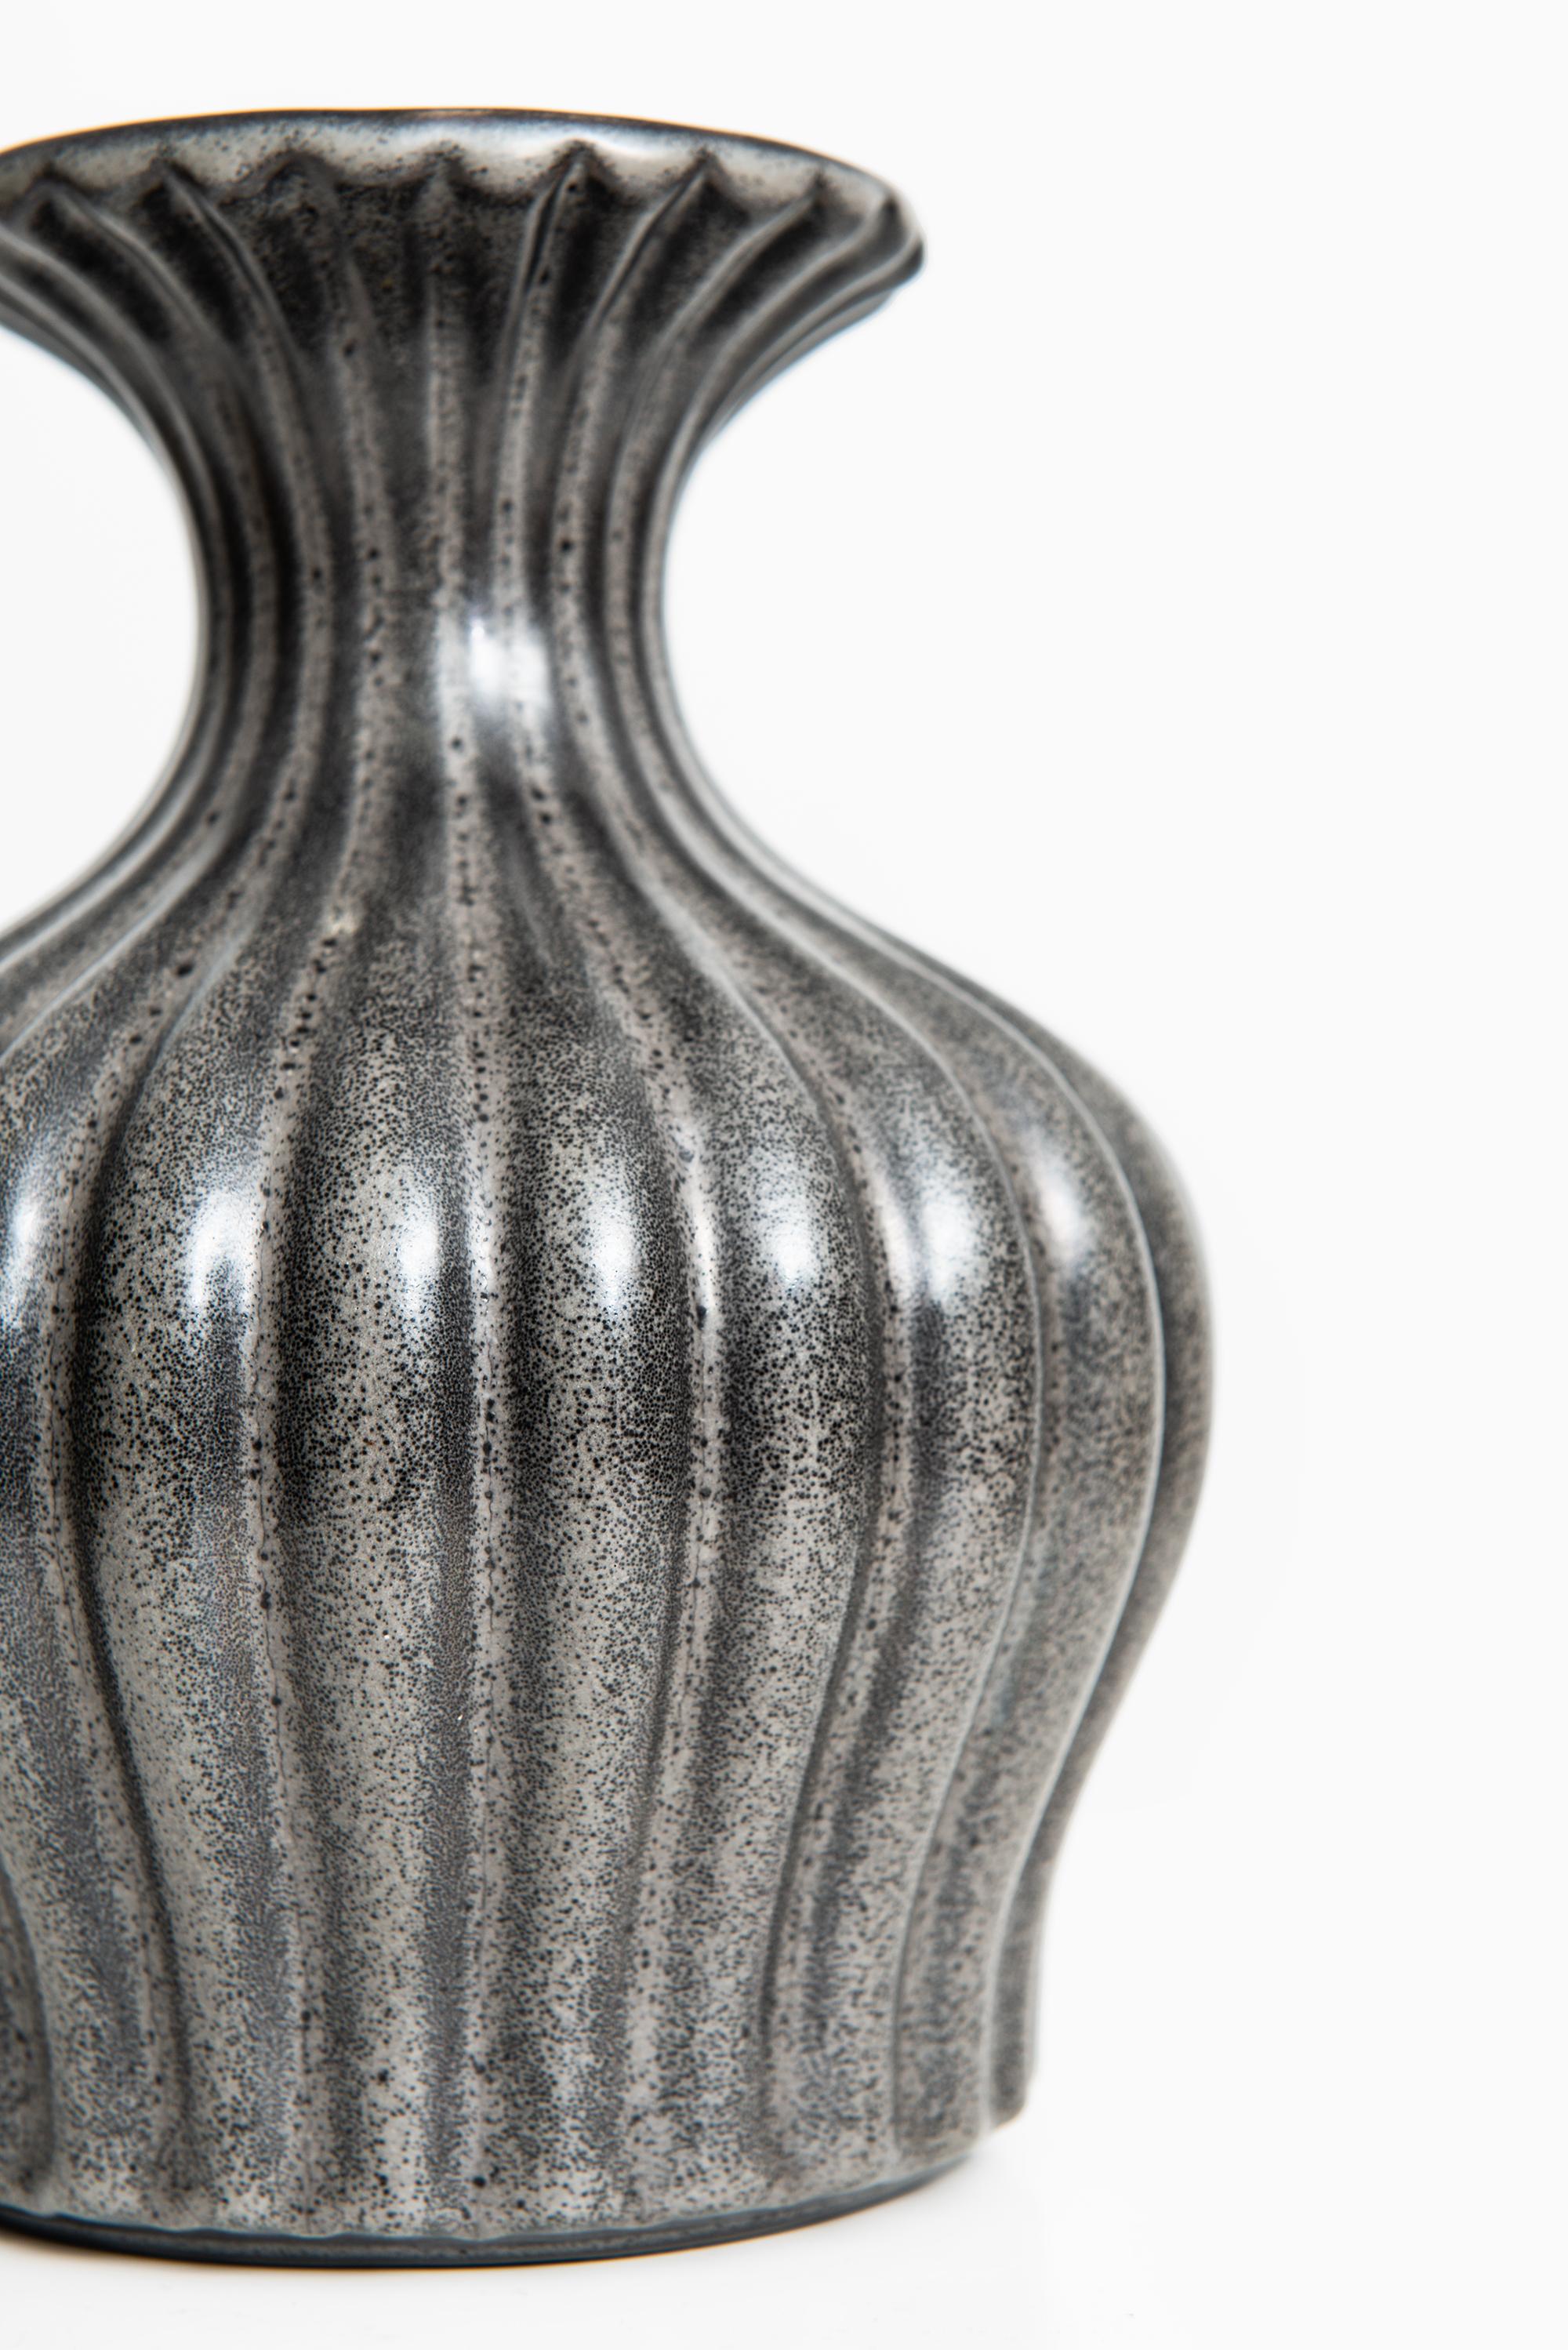 Ewald Dahlskog Ceramic Vase Produced by Bobergs Fajansfabrik in Sweden In Good Condition For Sale In Limhamn, Skåne län